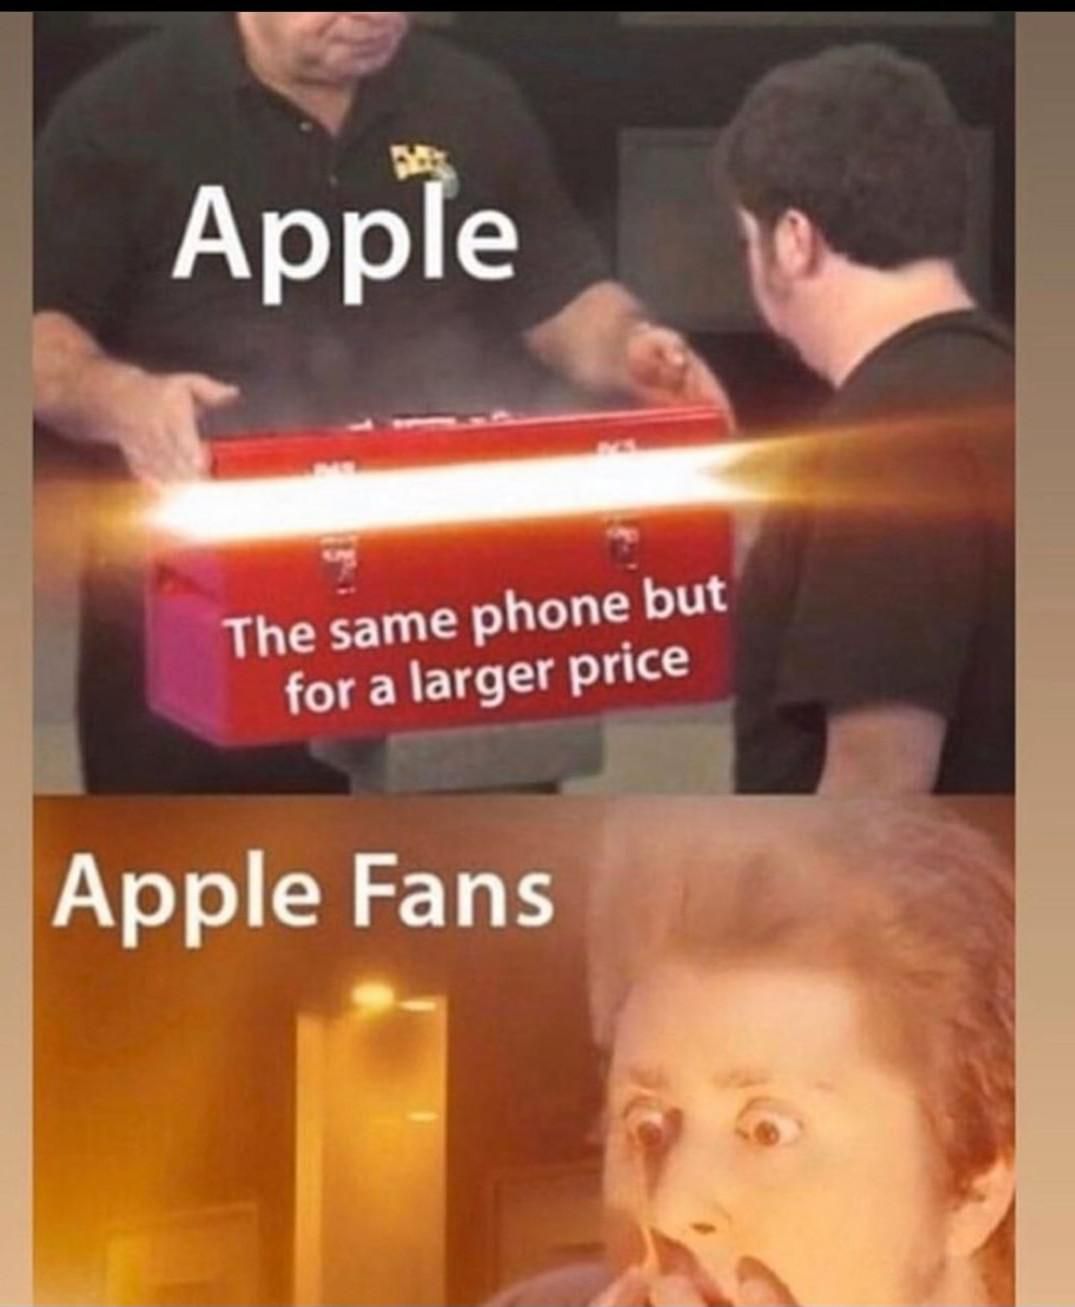 *** apples